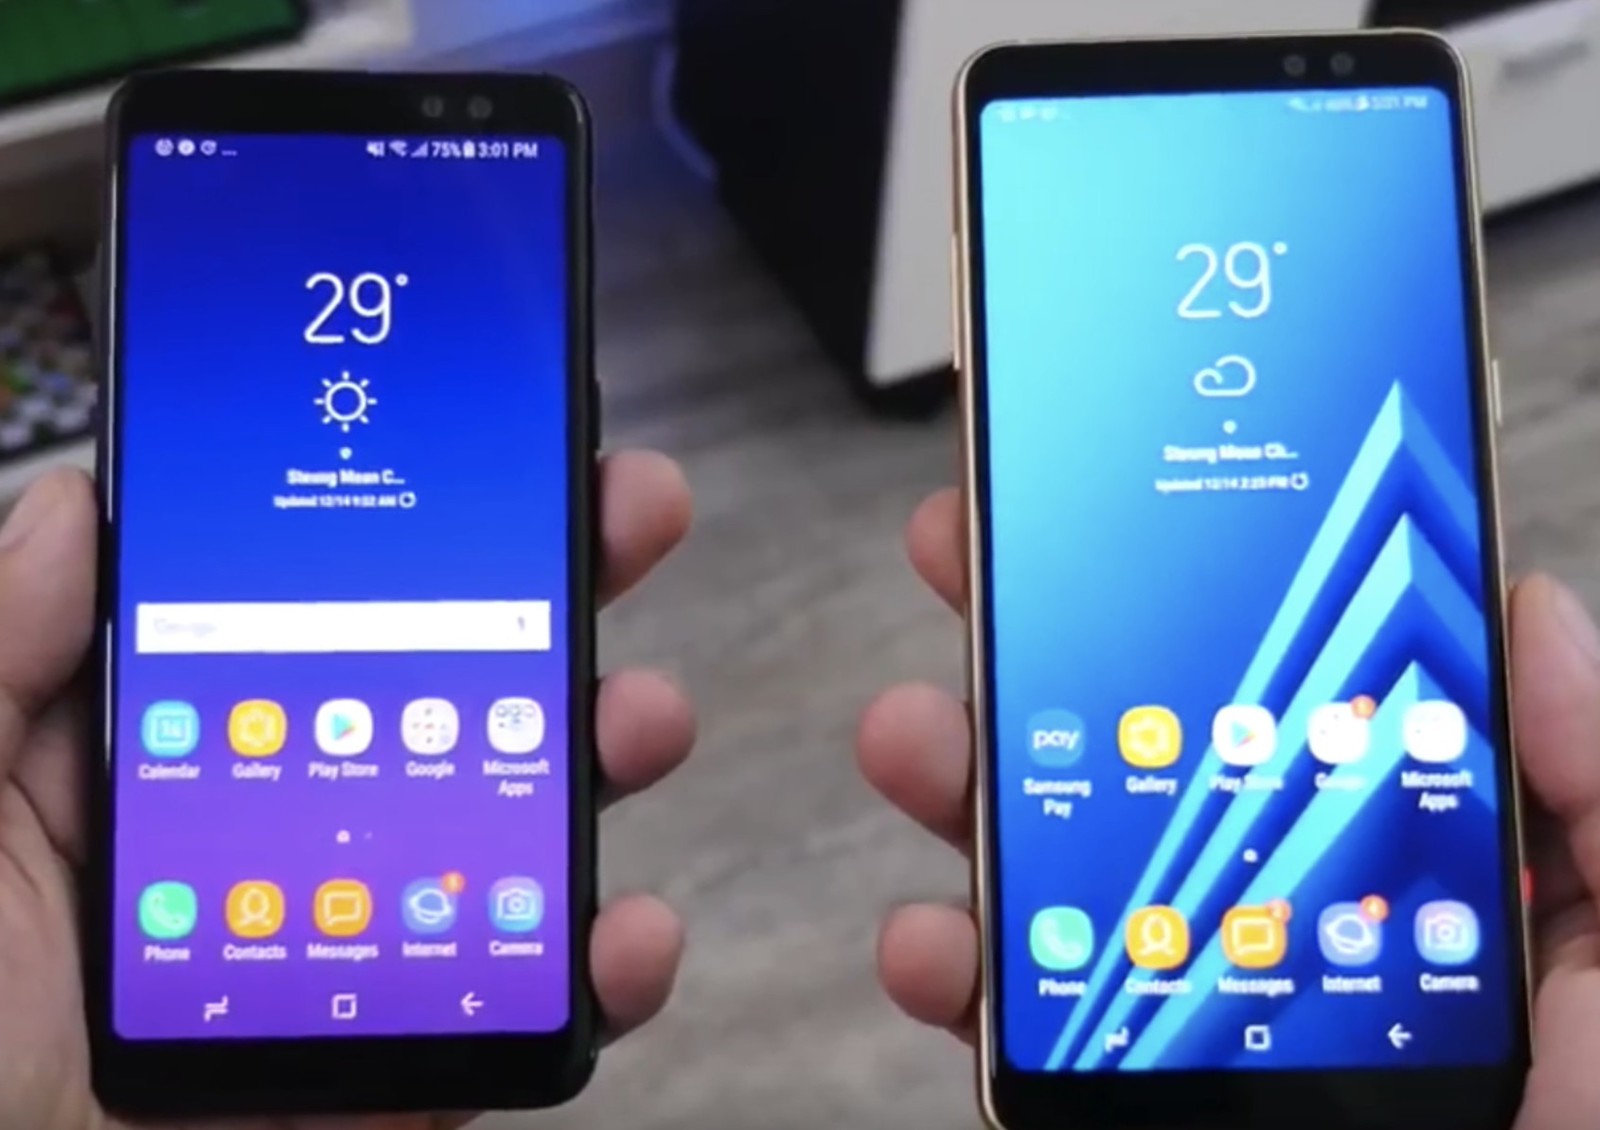 Samsung Galaxy A8 and A8+